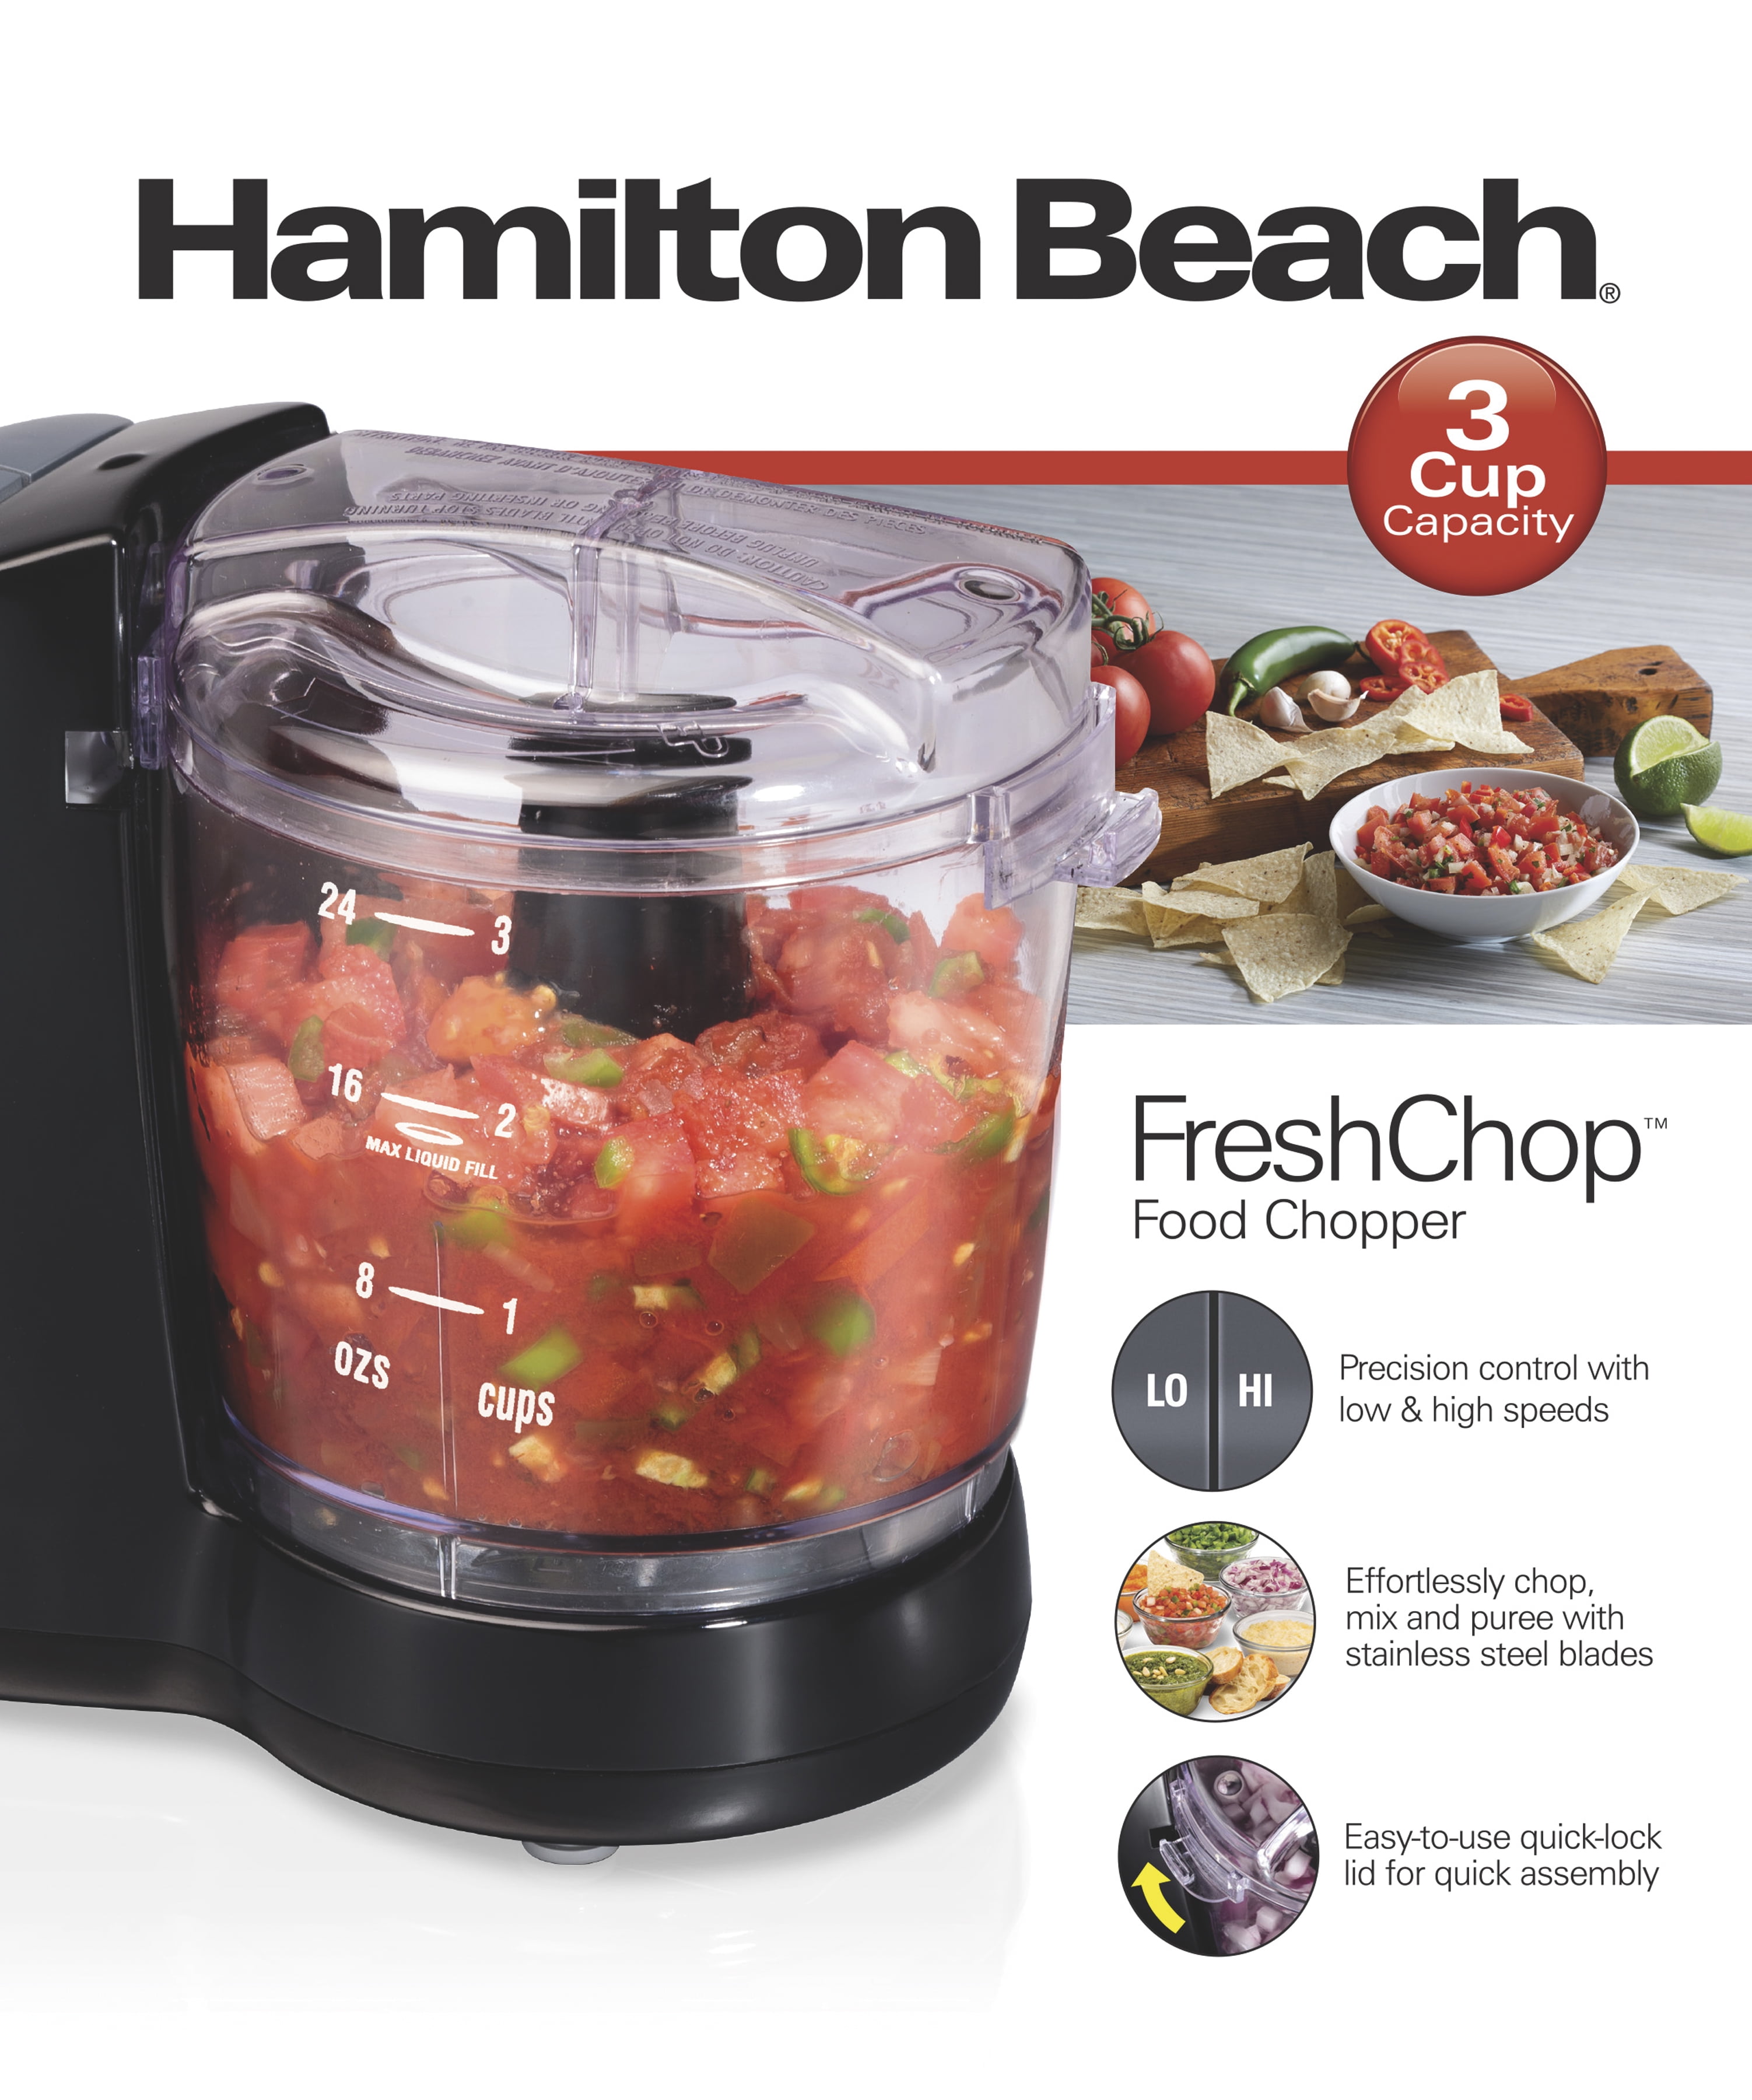 Hamilton Beach 3 Cup FreshChop Mini Food Chopper, Black, 72603